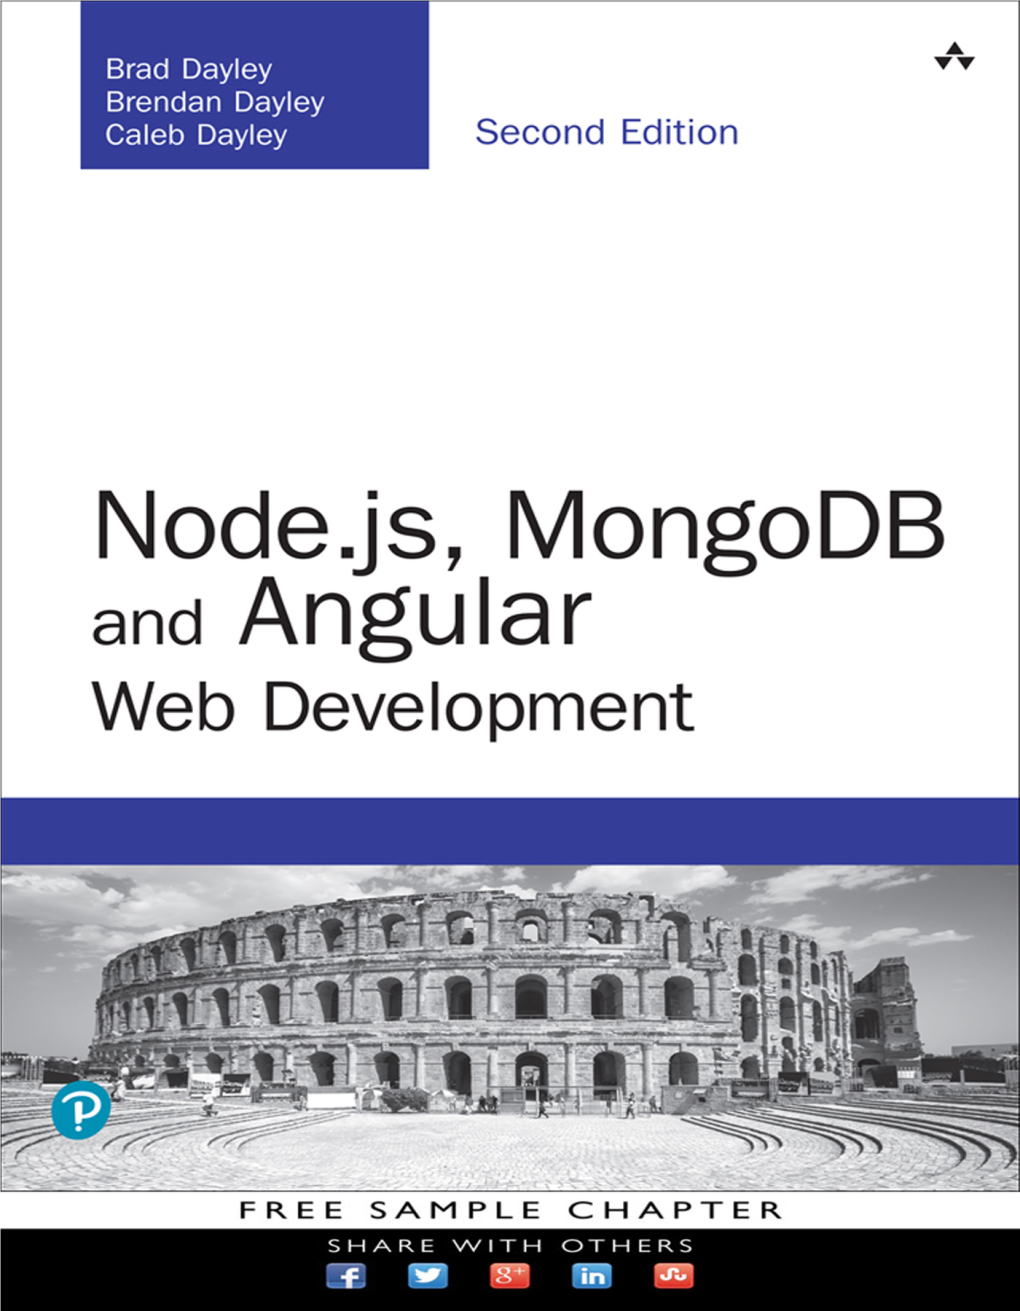 Node.Js, Mongodb and Angular Web Development